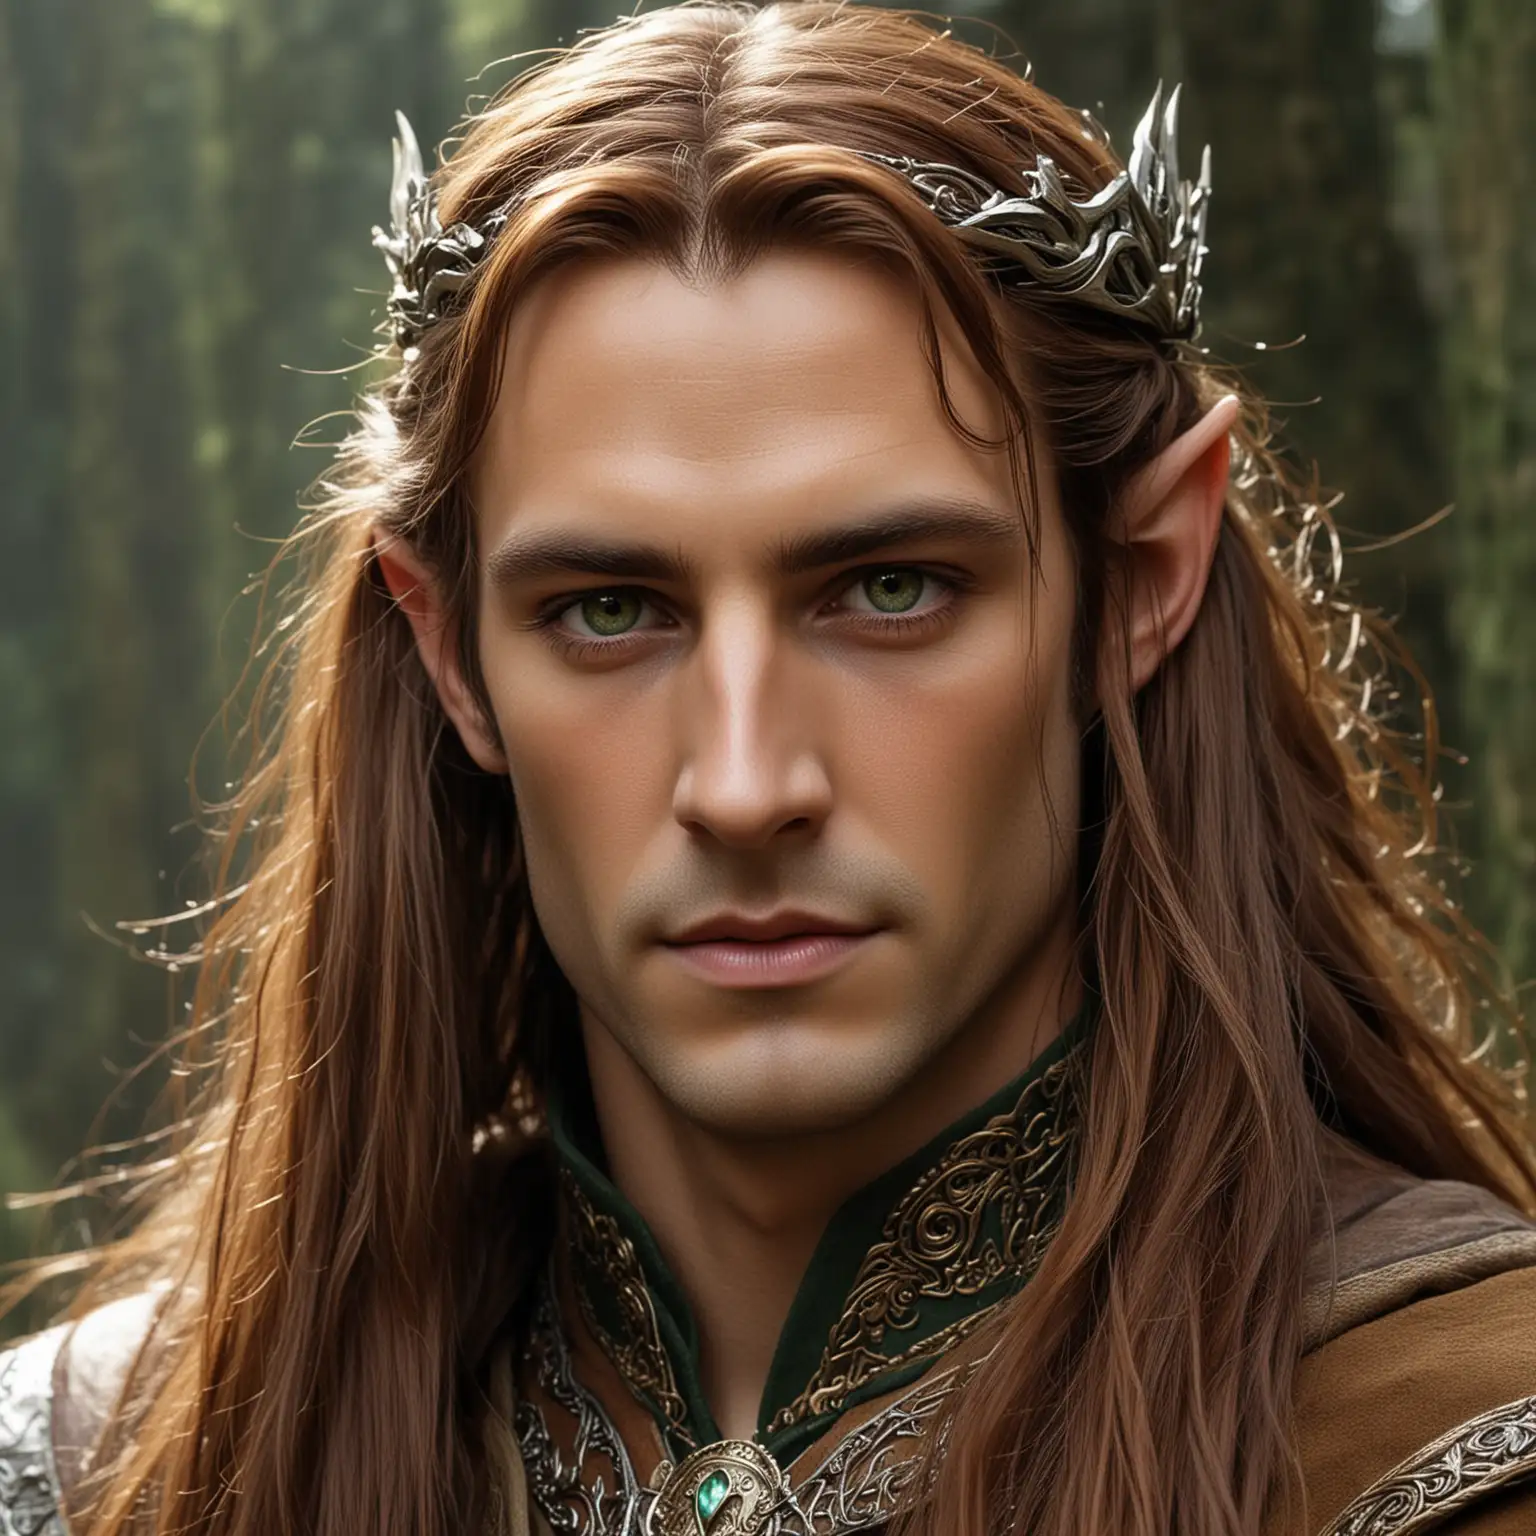 Elven king, royalty, elegant, crown, hot, rugged, strong, green eyes, long chestnut brown hair, pointed ears.